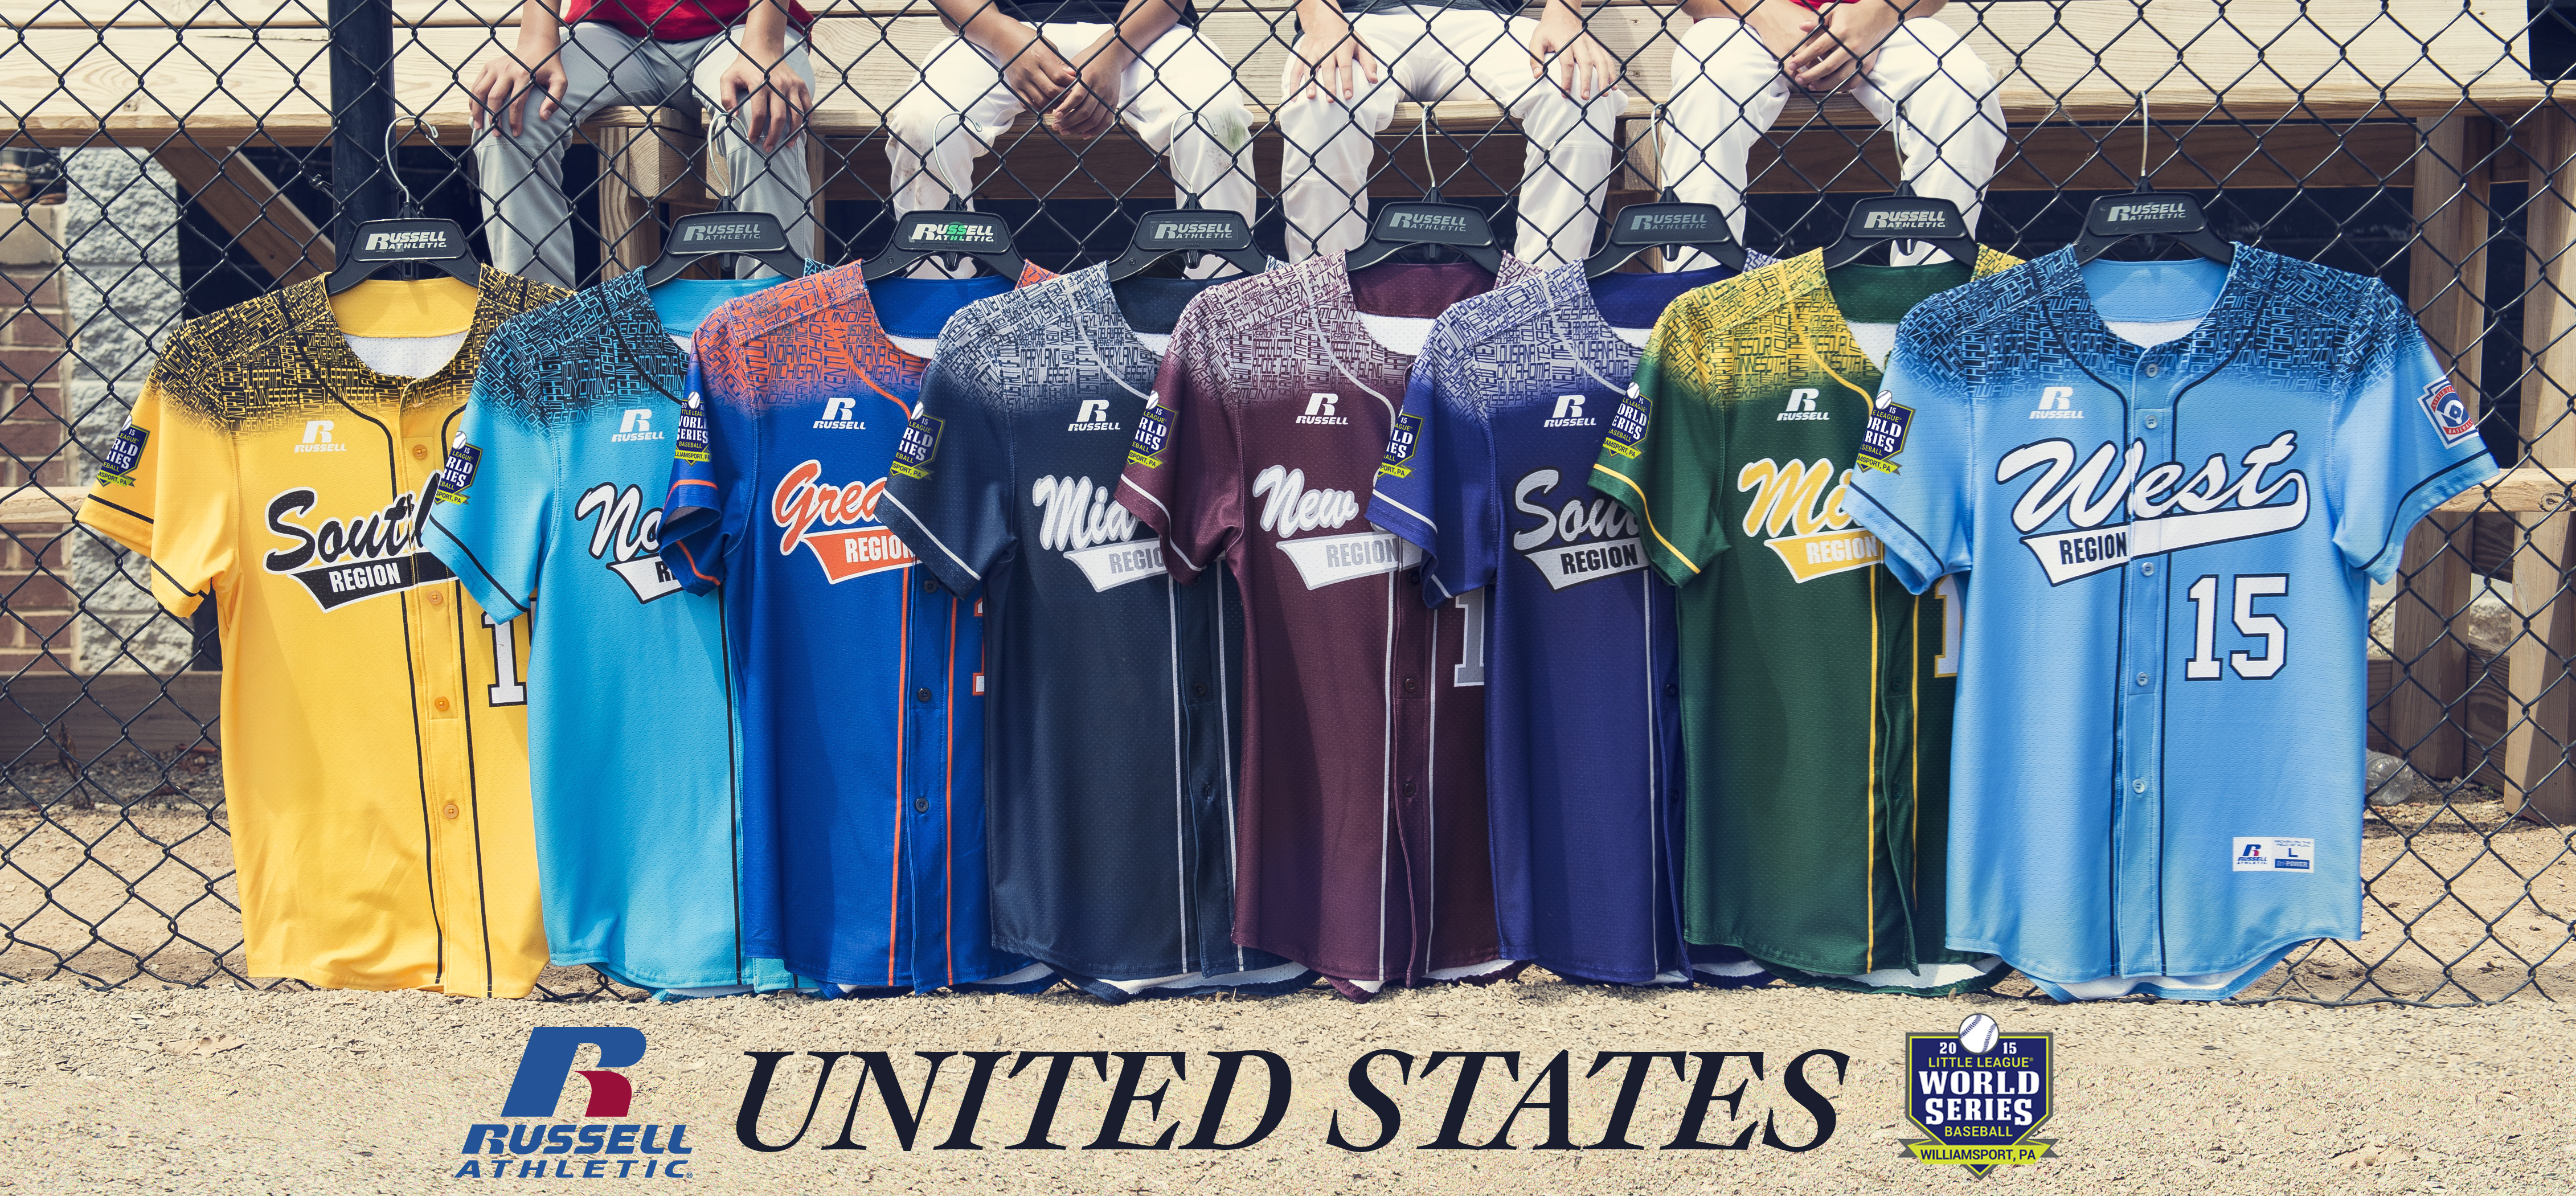 world series uniforms